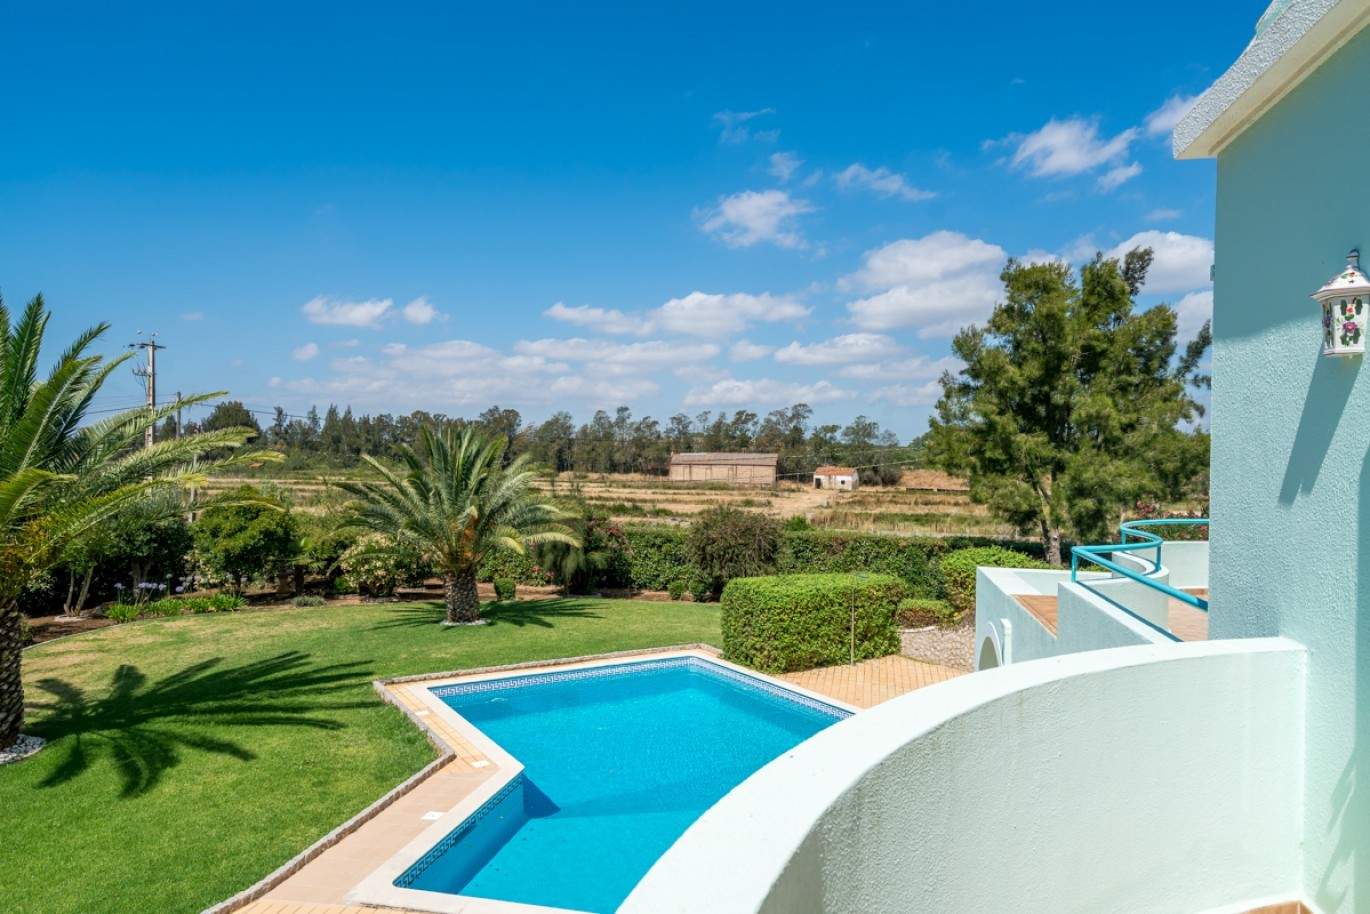 Sale of villa with garden and pool in Penina, Alvor, Algarve, Portugal_83408